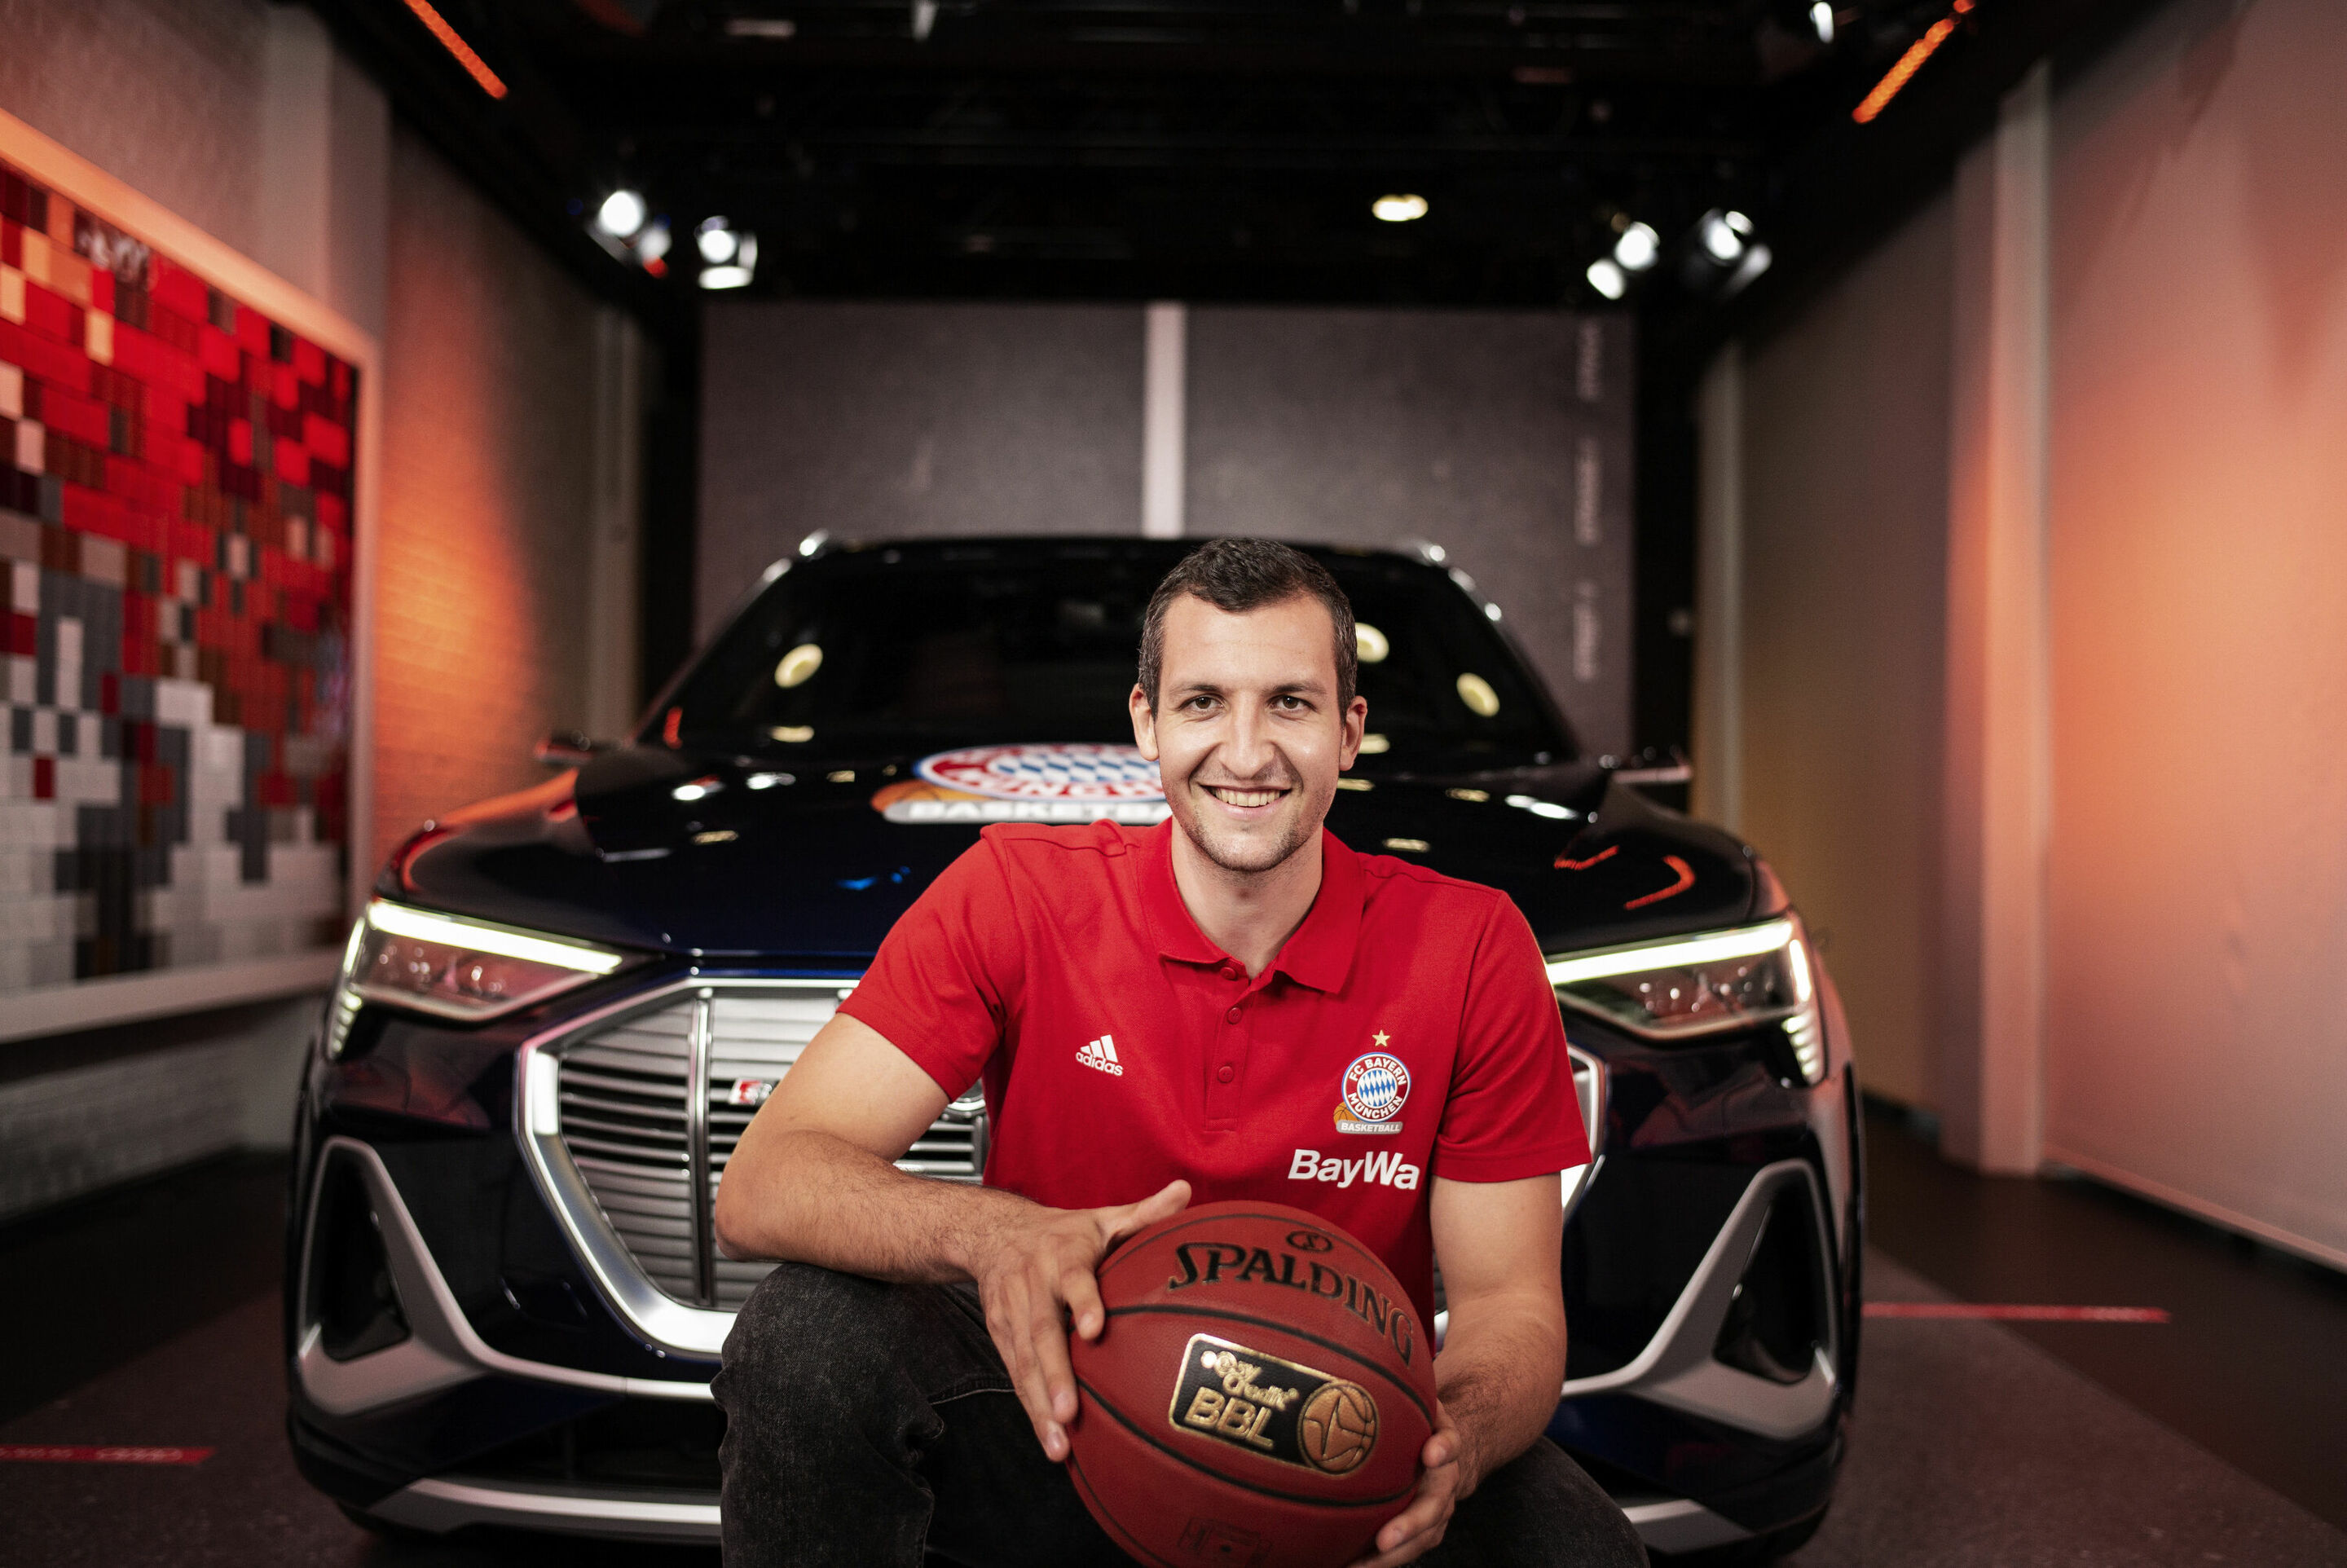 New Audi cars for FC Bayern basketball players